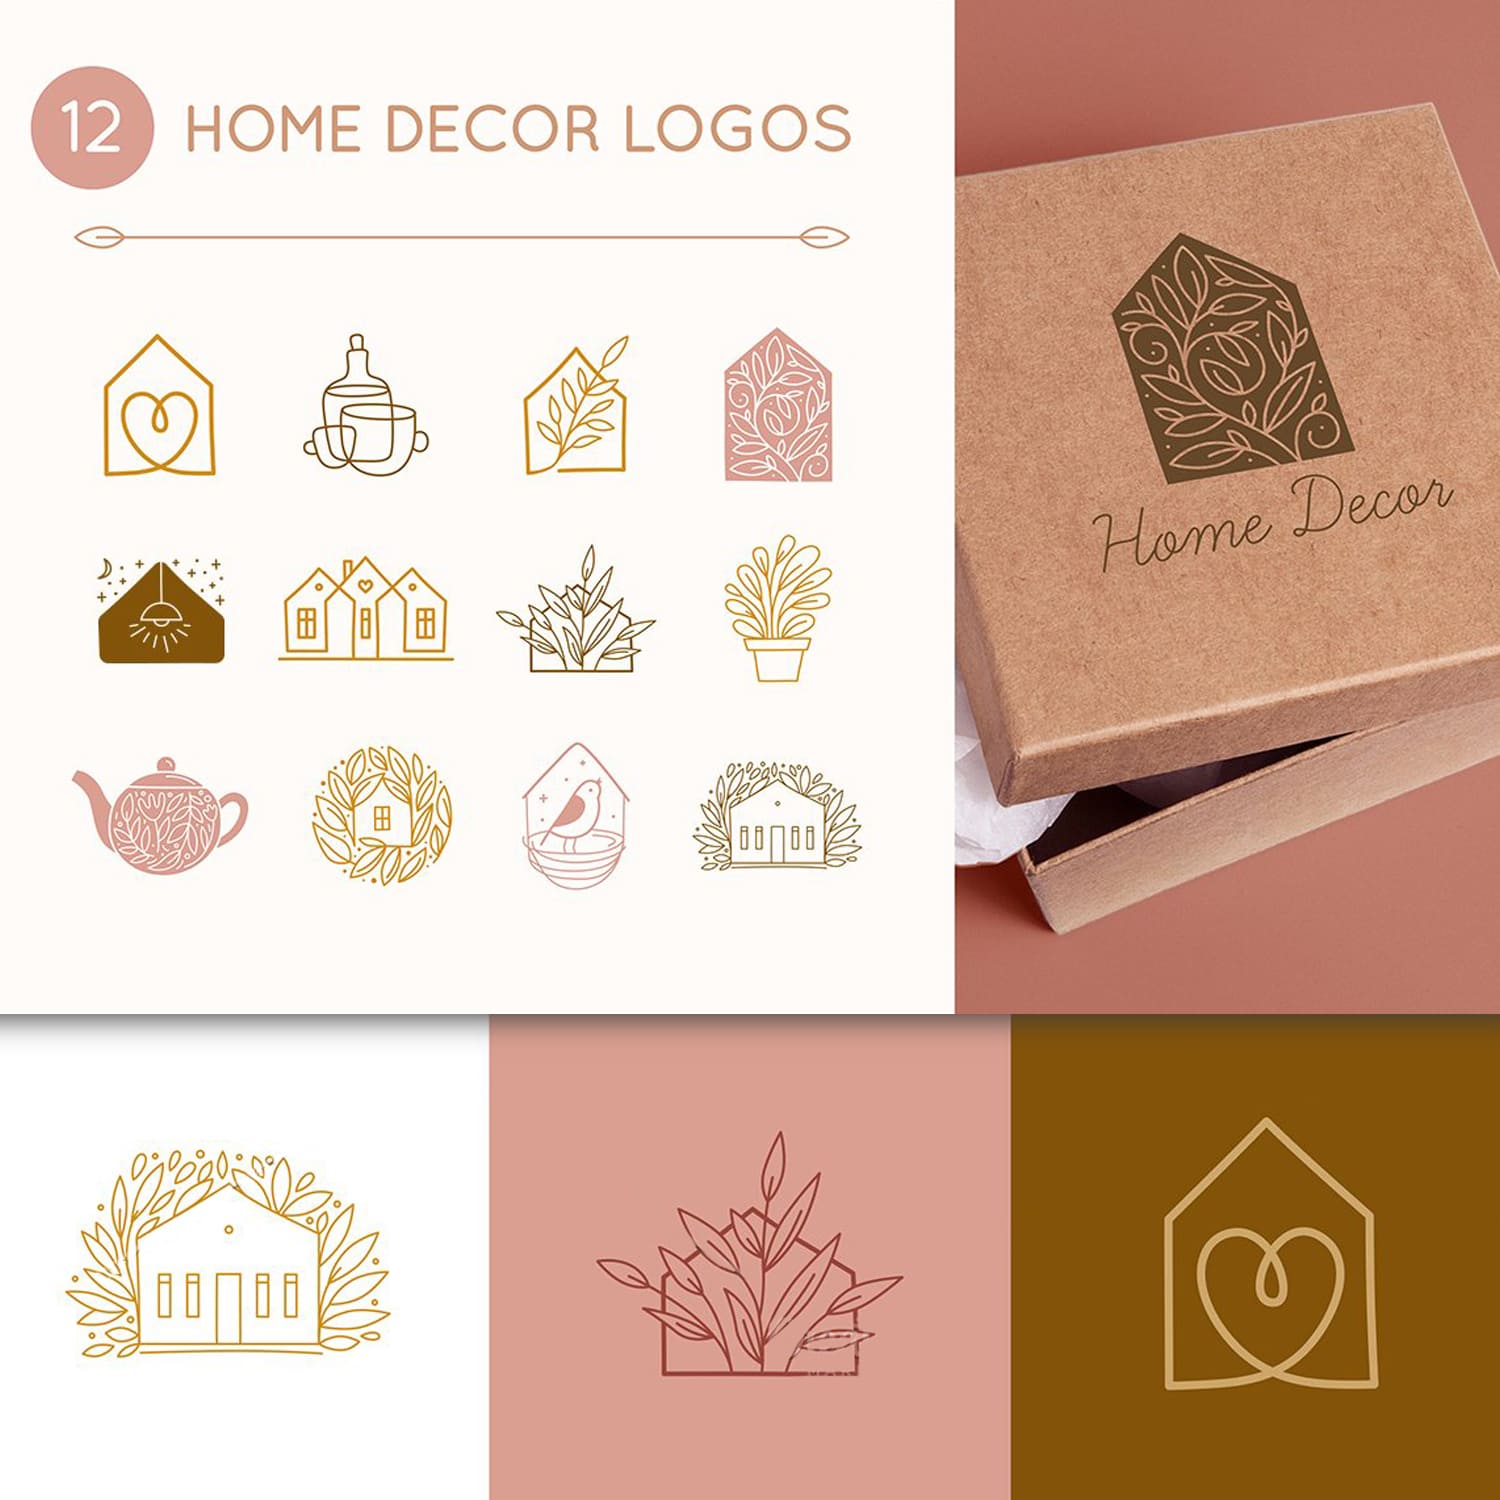 43 Interior Design & Decoration Logos | BrandCrowd blog